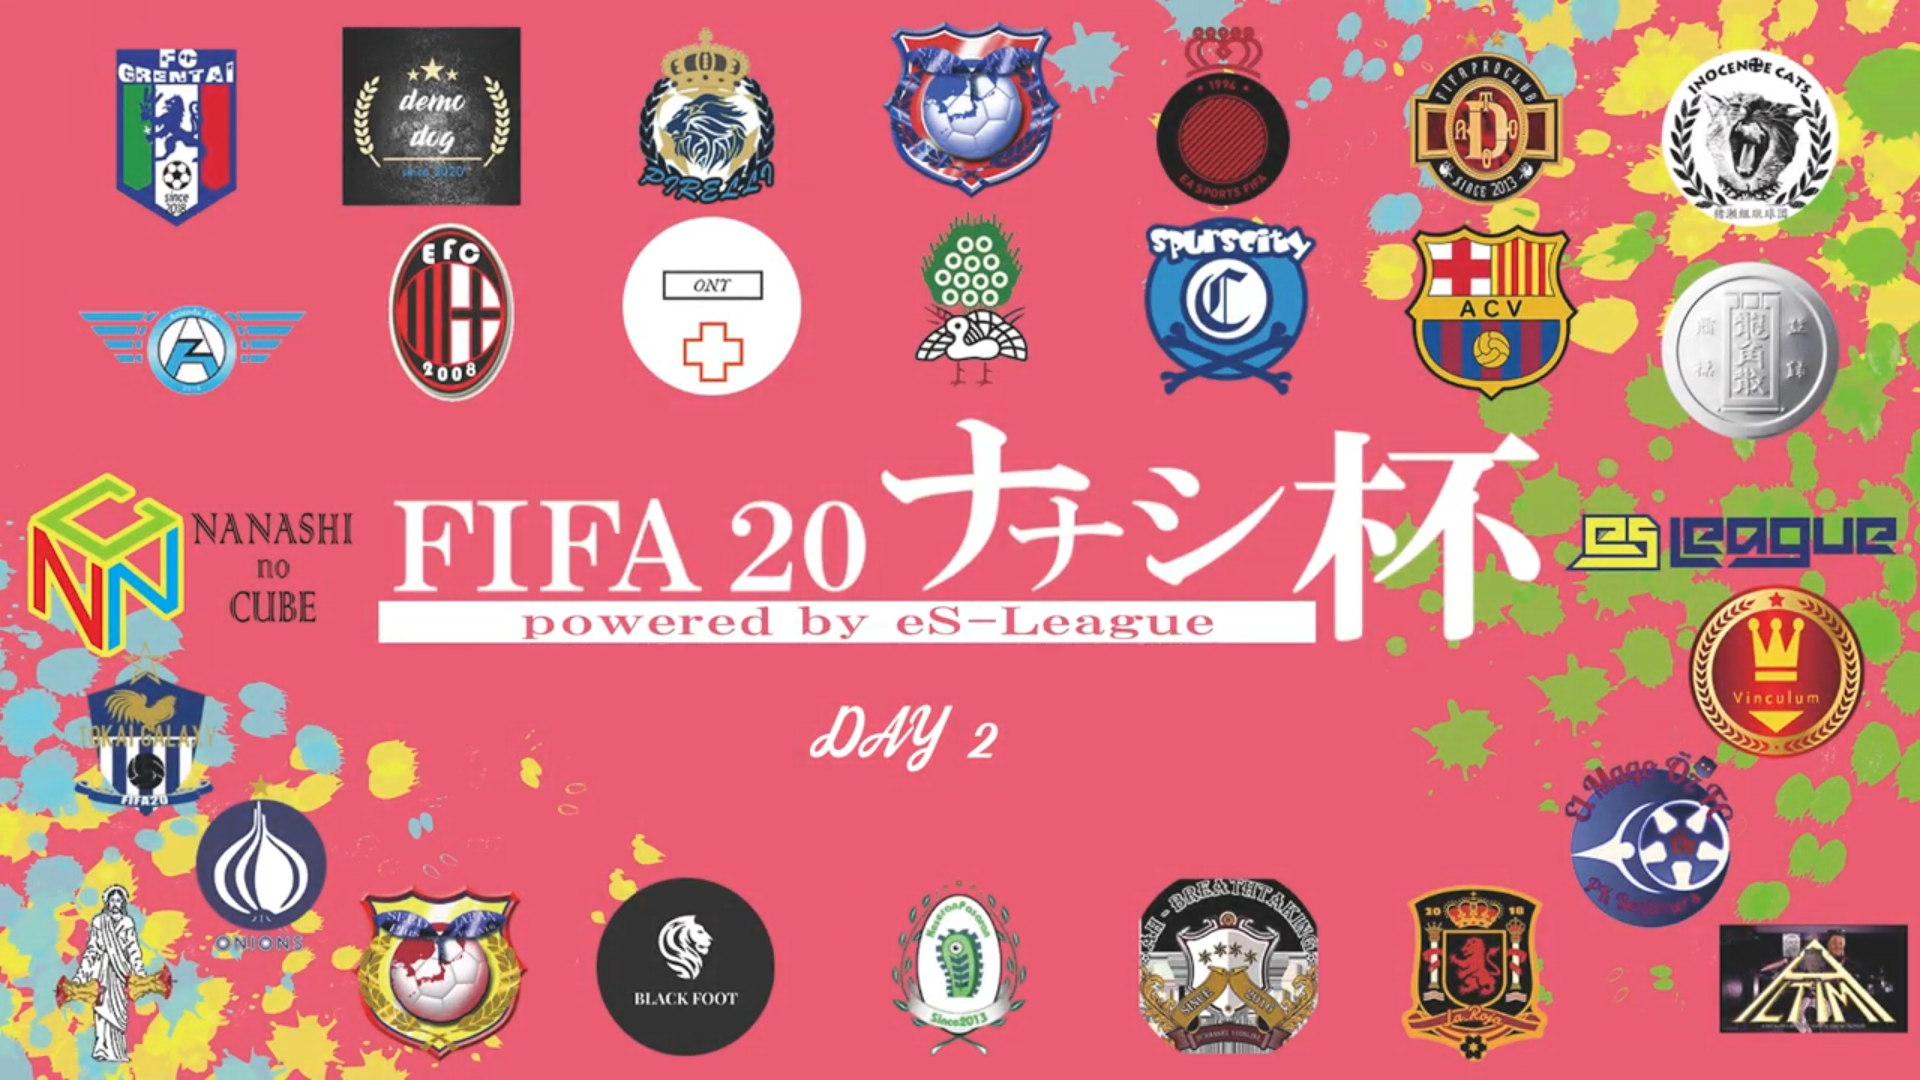 【FIFA 20】ナナシ杯powered by eS-League DAY 2【ナナシのキューブ×eS-League】